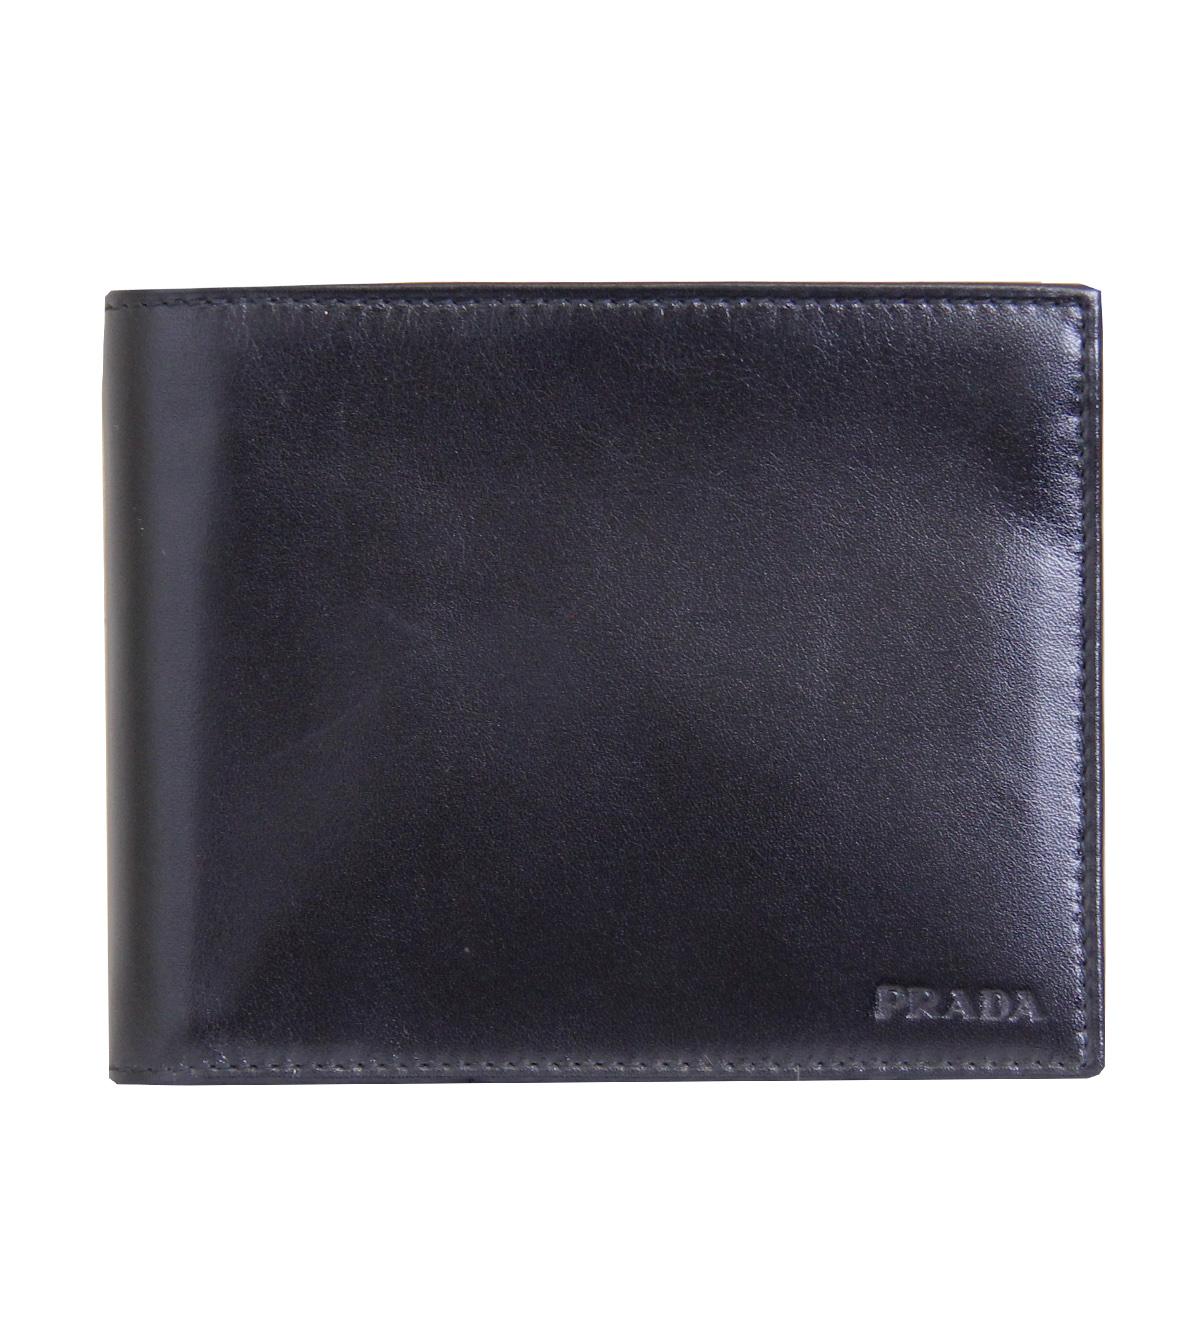 Foto Prada Black Soft Large Leather Wallet